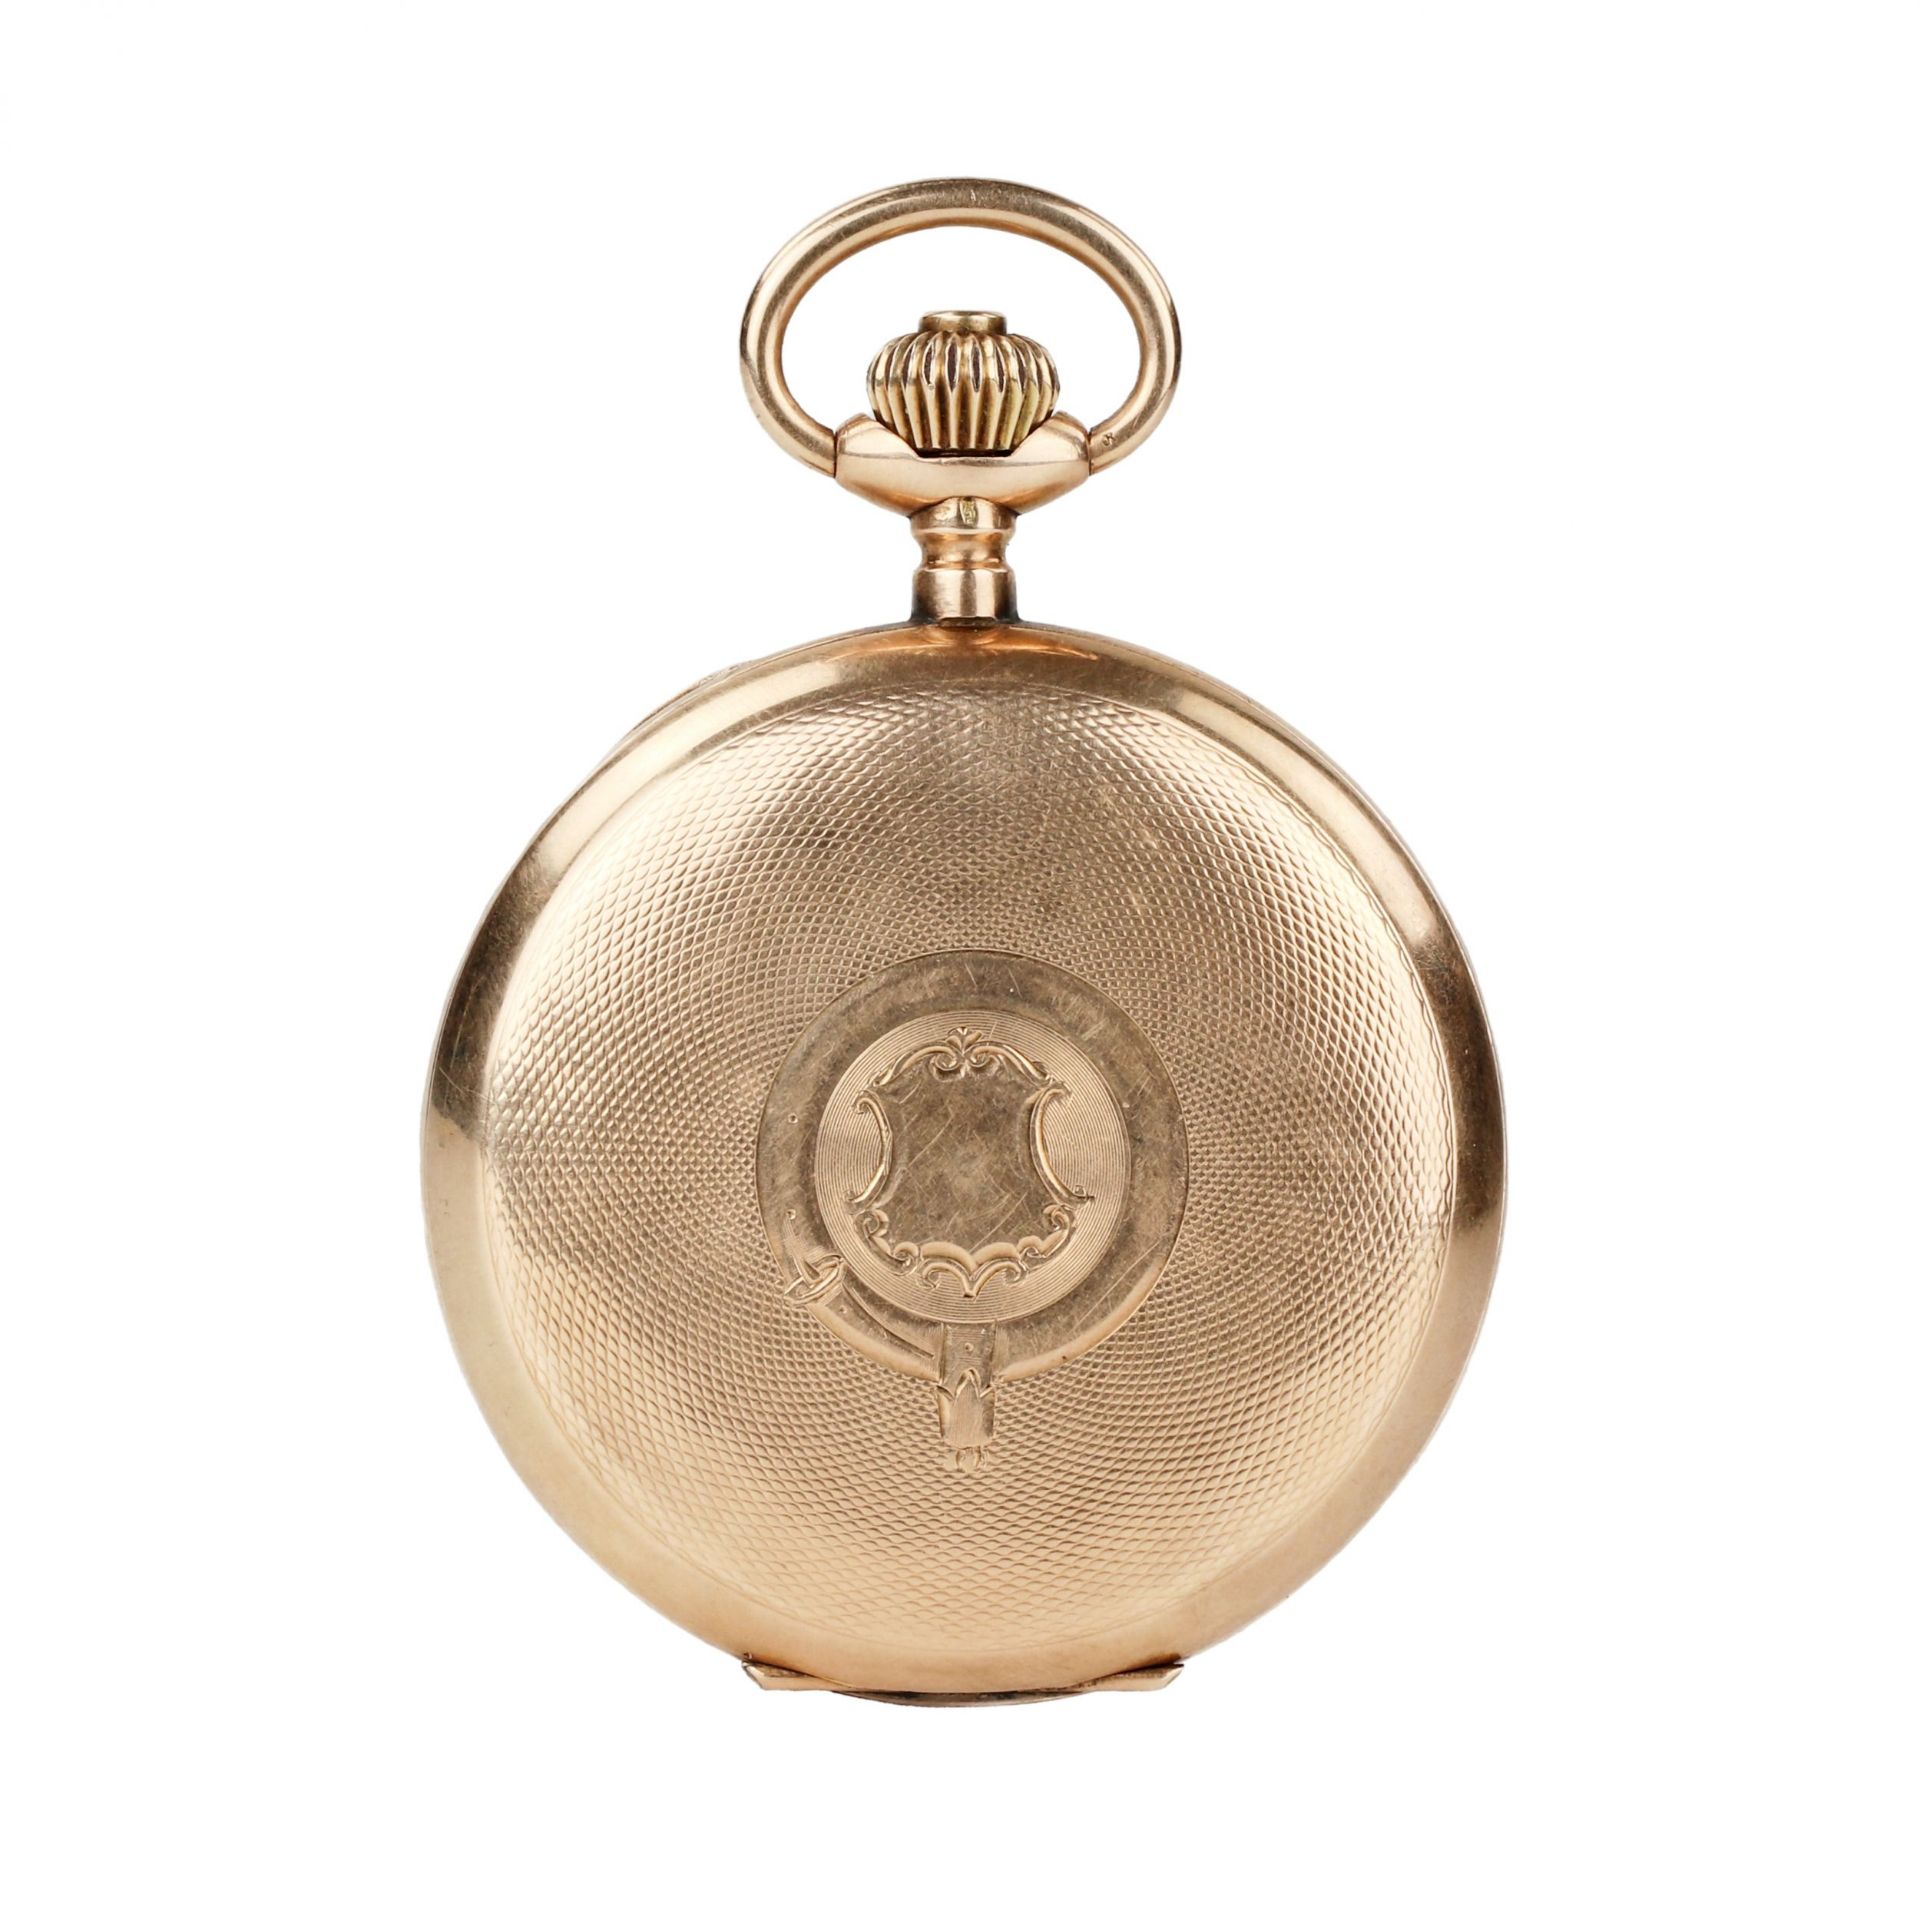 Moulinet gold pocket watch. - Image 2 of 9